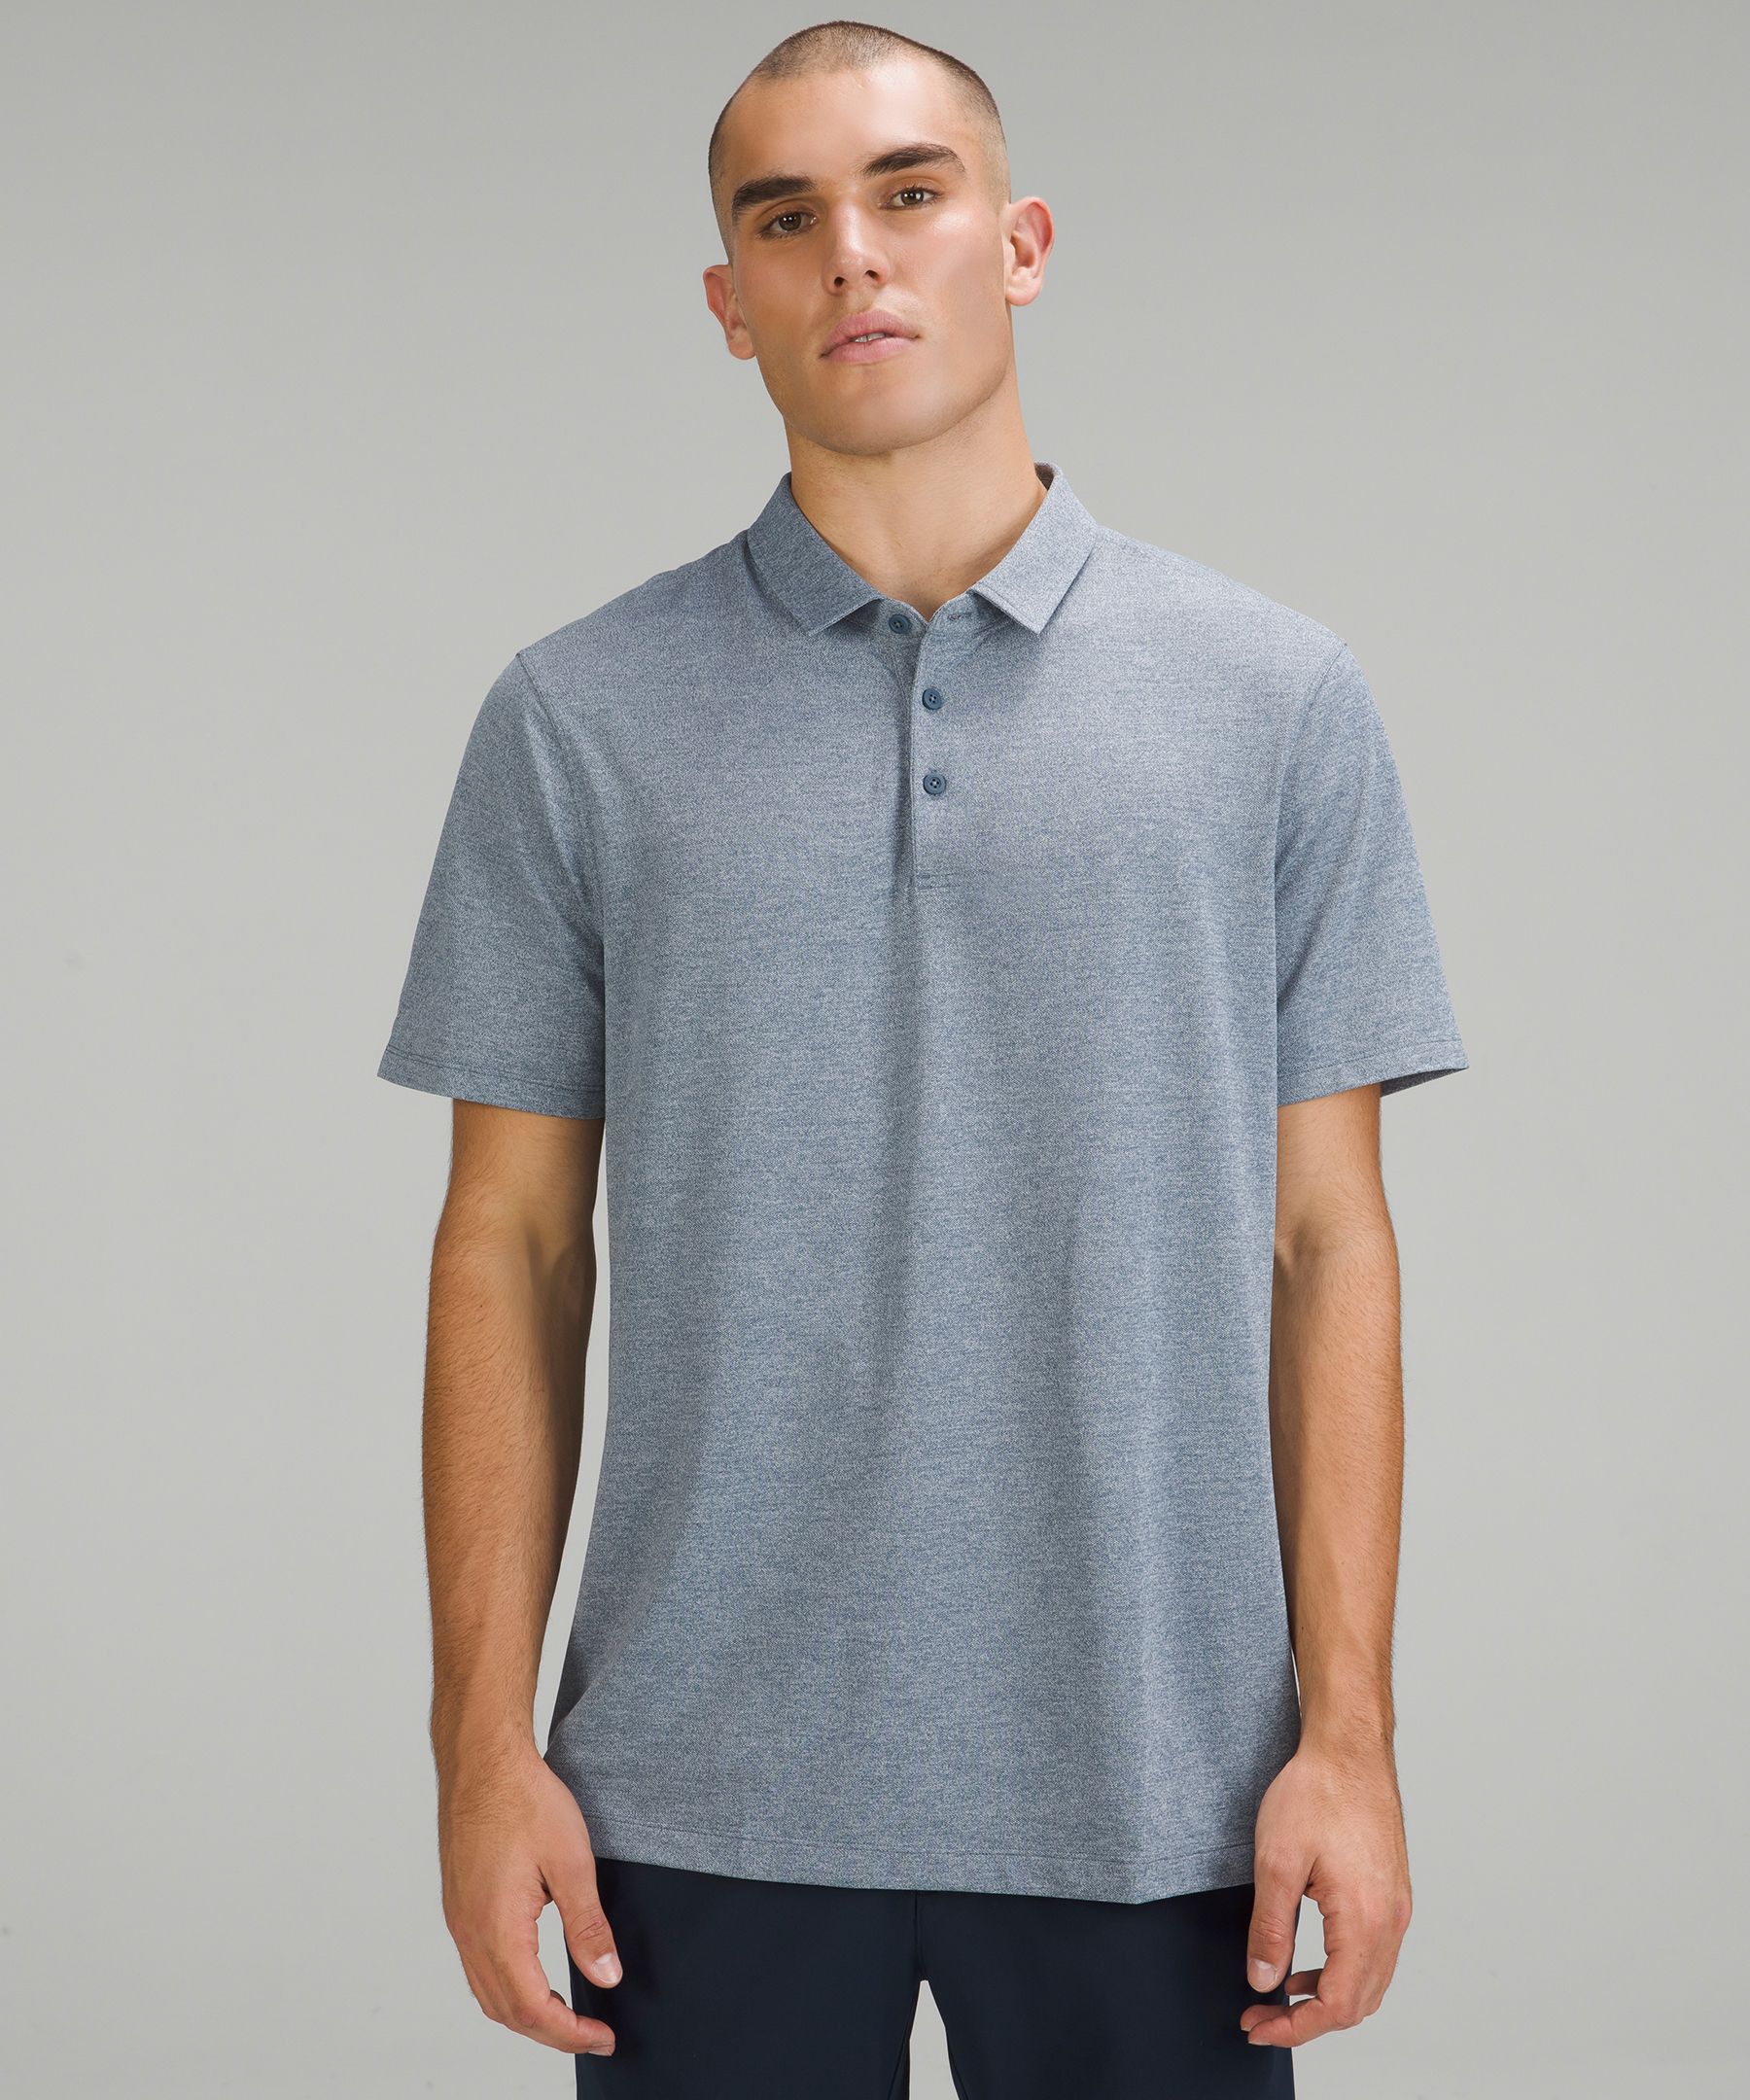 Evolution Polo Shirt *Pique Fabric | Men's Short Sleeve Shirts & Tee's | lululemon